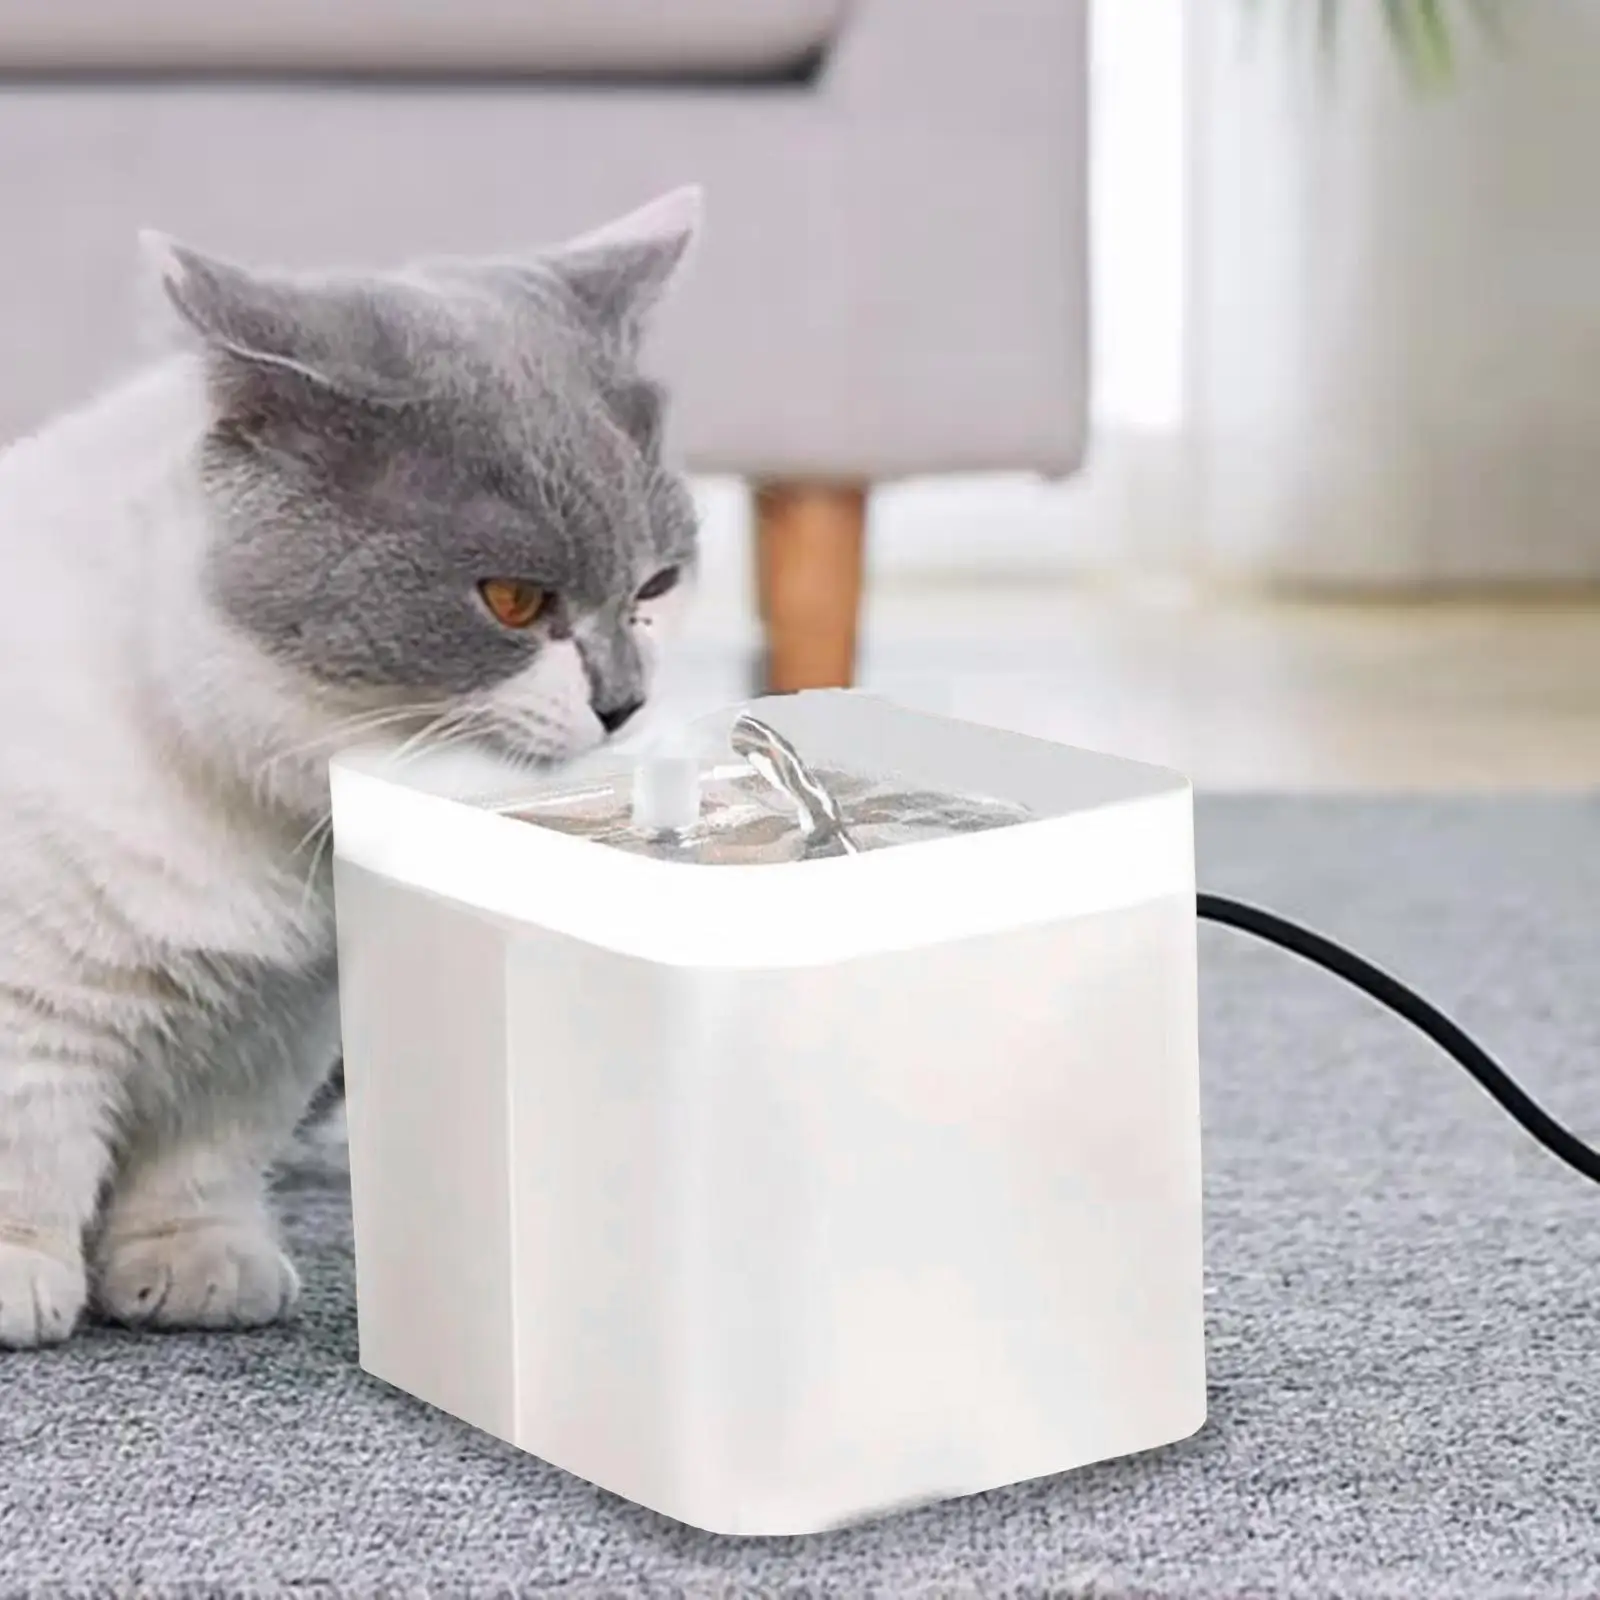 Pet Cat Water Fountain Water Dispenser Super Quiet Drinking Water Bowl USB